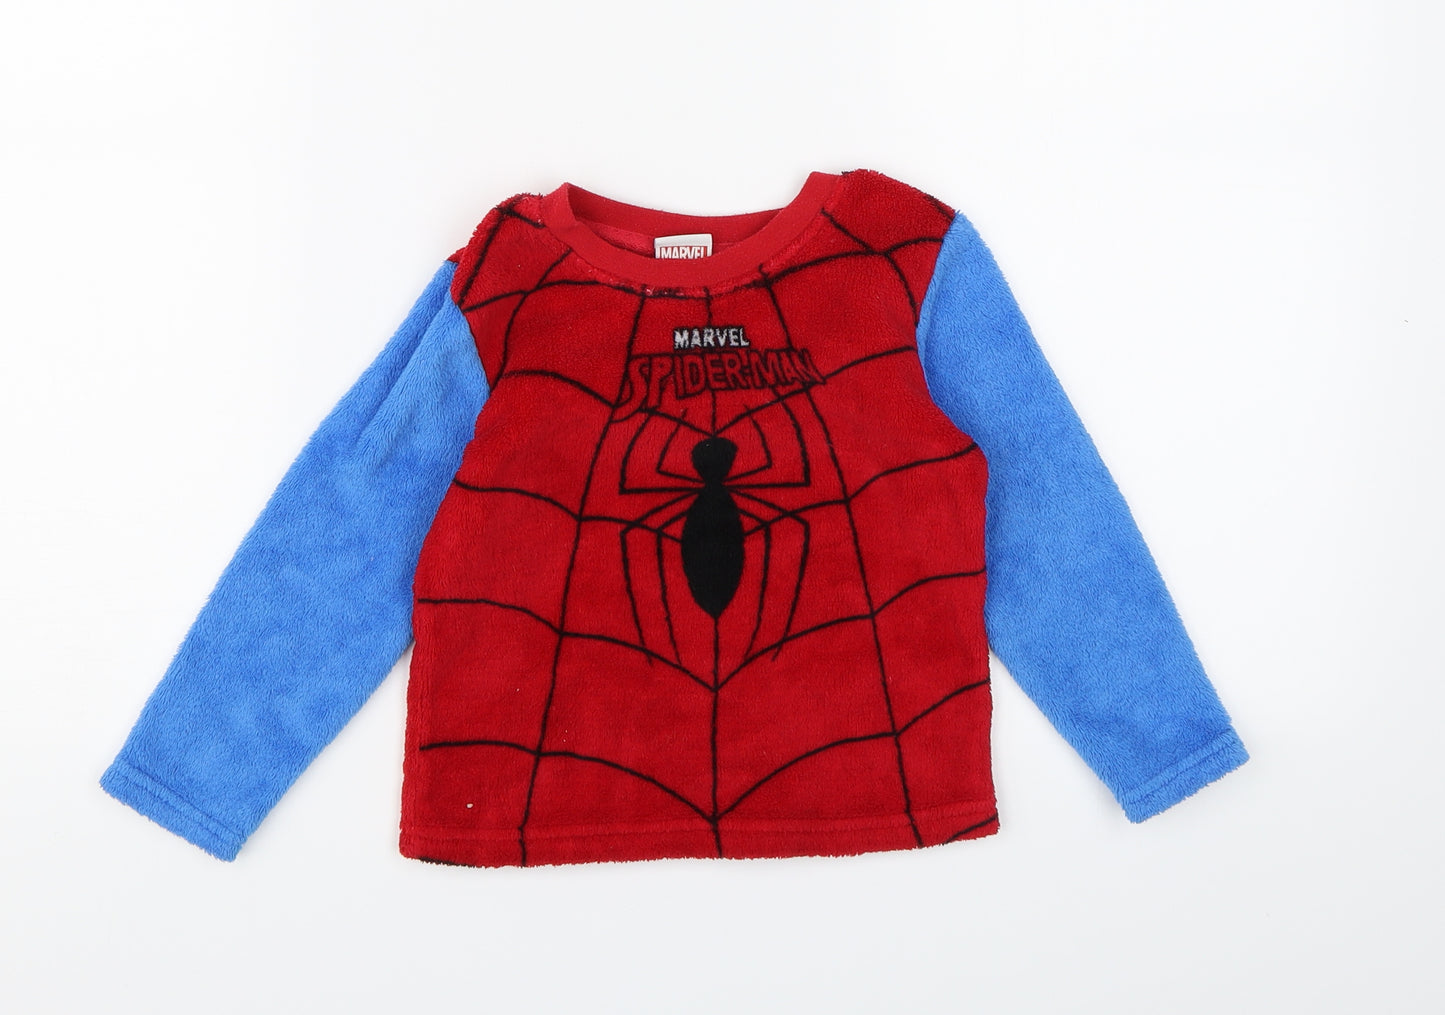 Marvel Boys Red  Fleece  Pyjama Top Size 2-3 Years  - SpiderMan